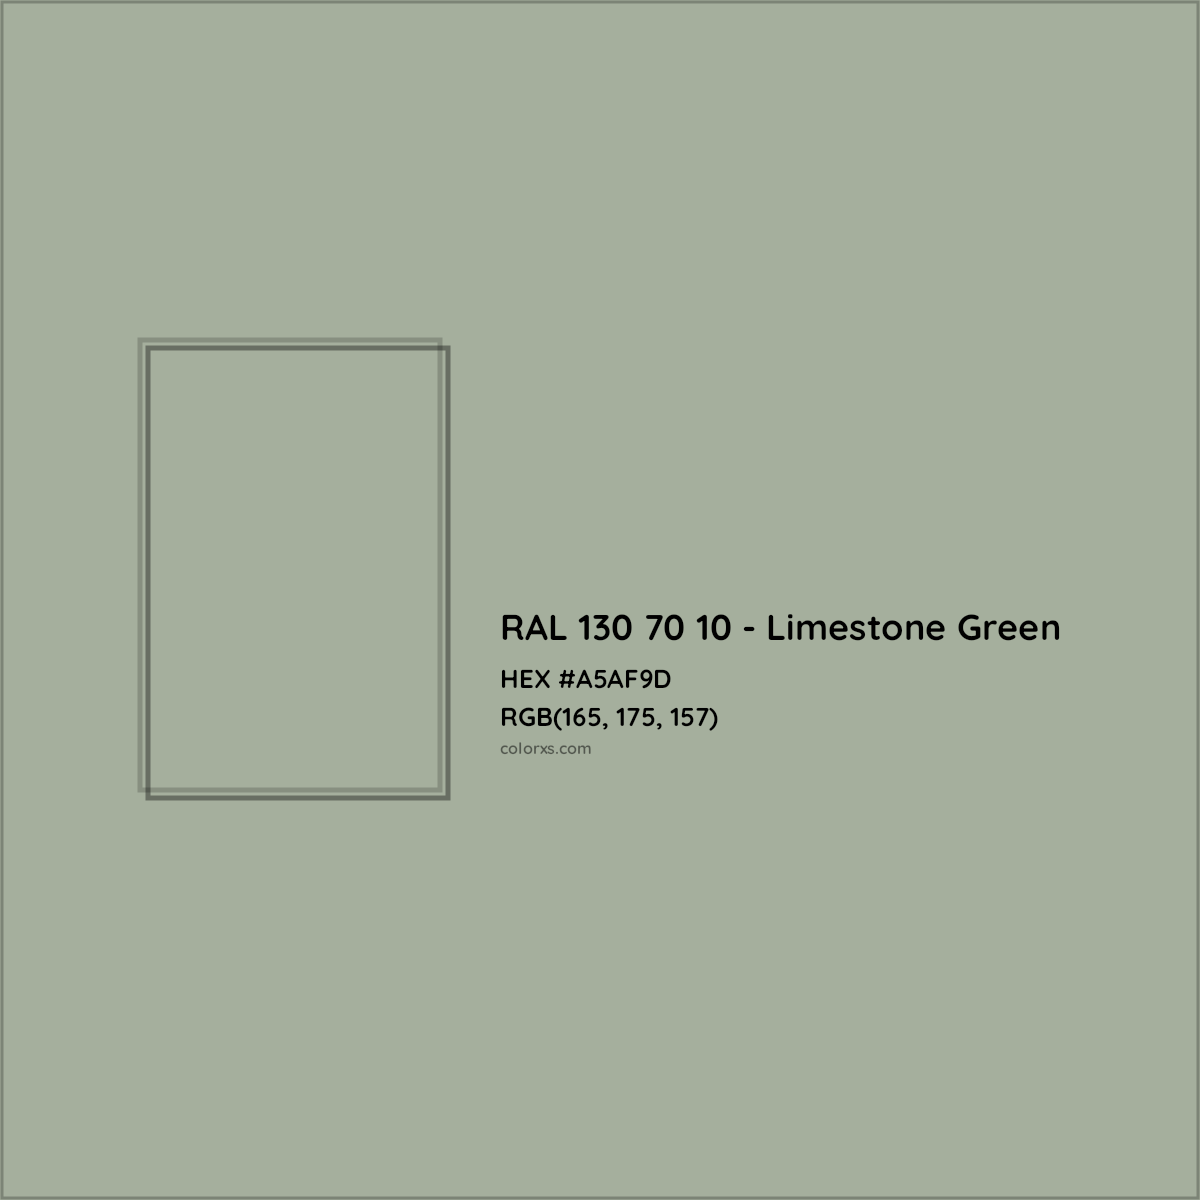 HEX #A5AF9D RAL 130 70 10 - Limestone Green CMS RAL Design - Color Code